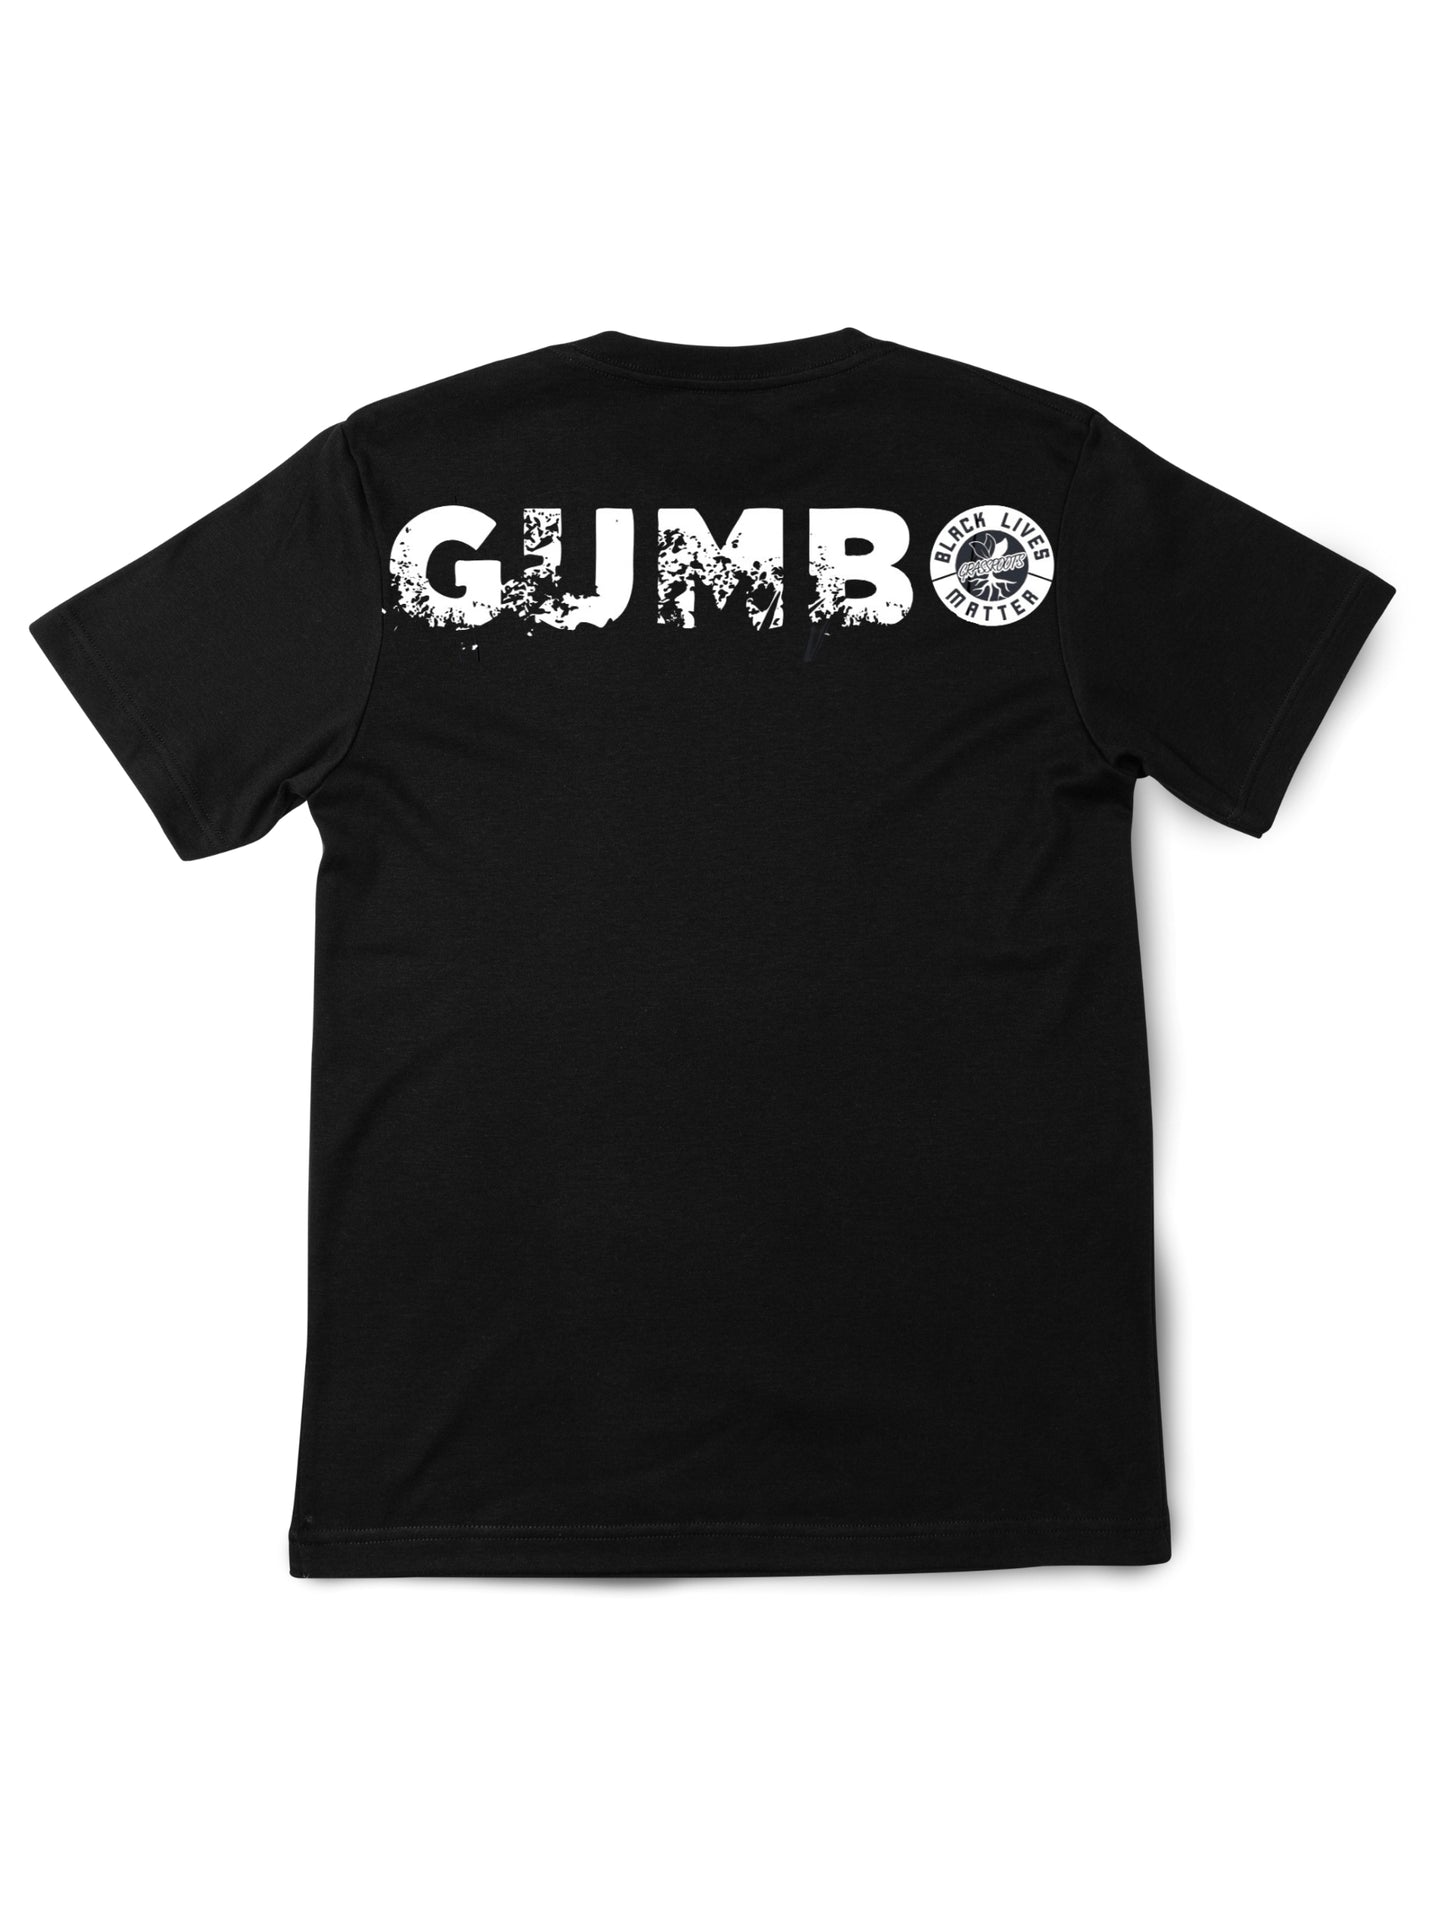 GUMBO x BLMG T-Shirt